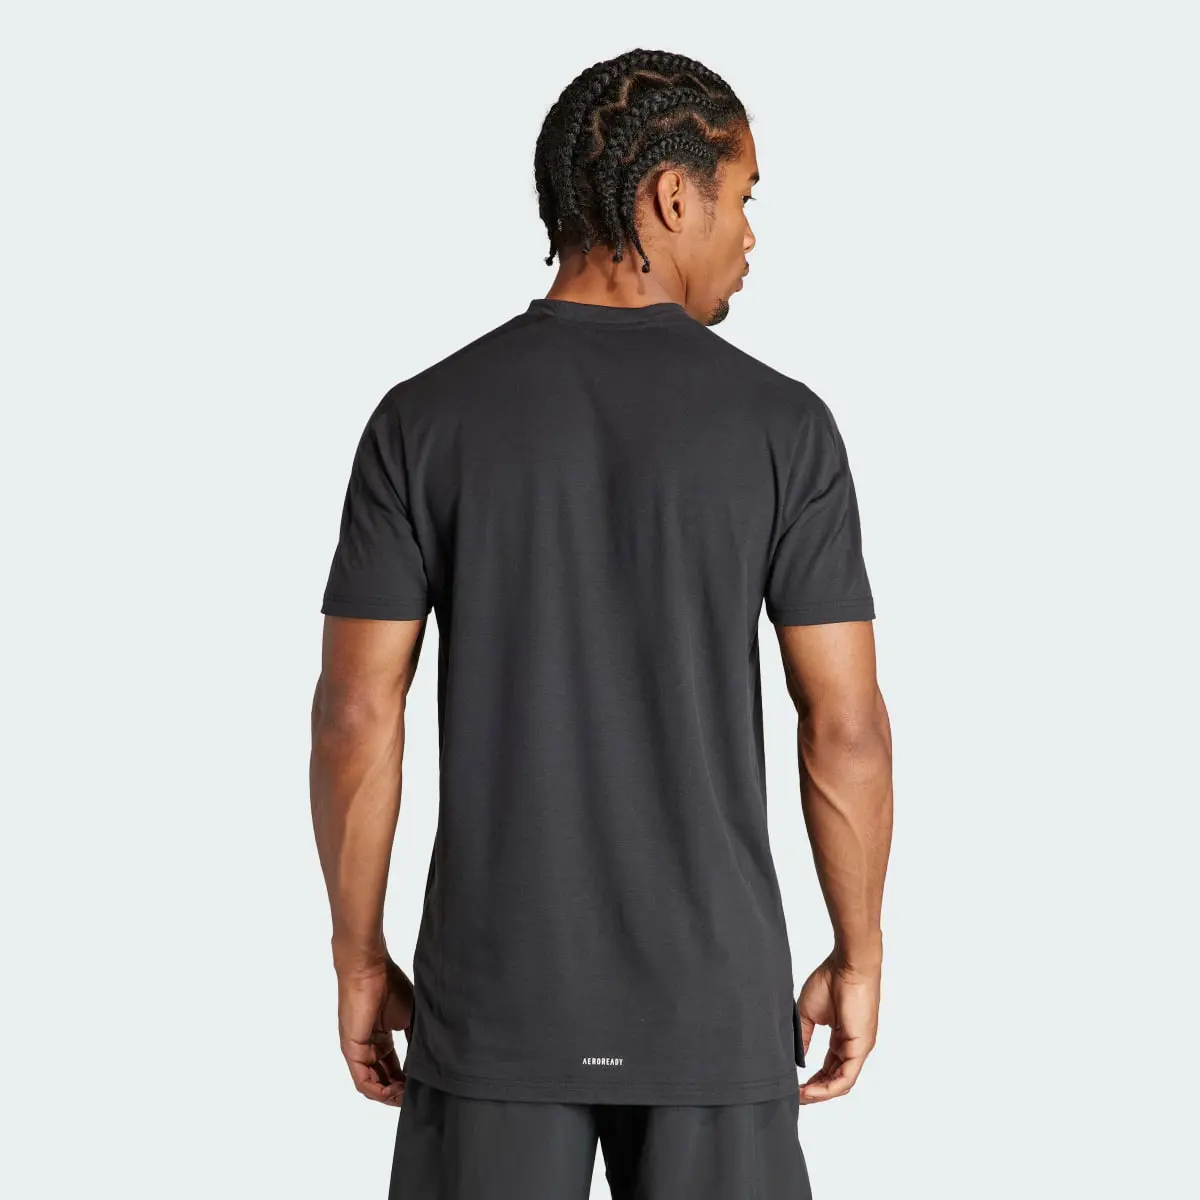 Adidas T-shirt Designed for Training. 3